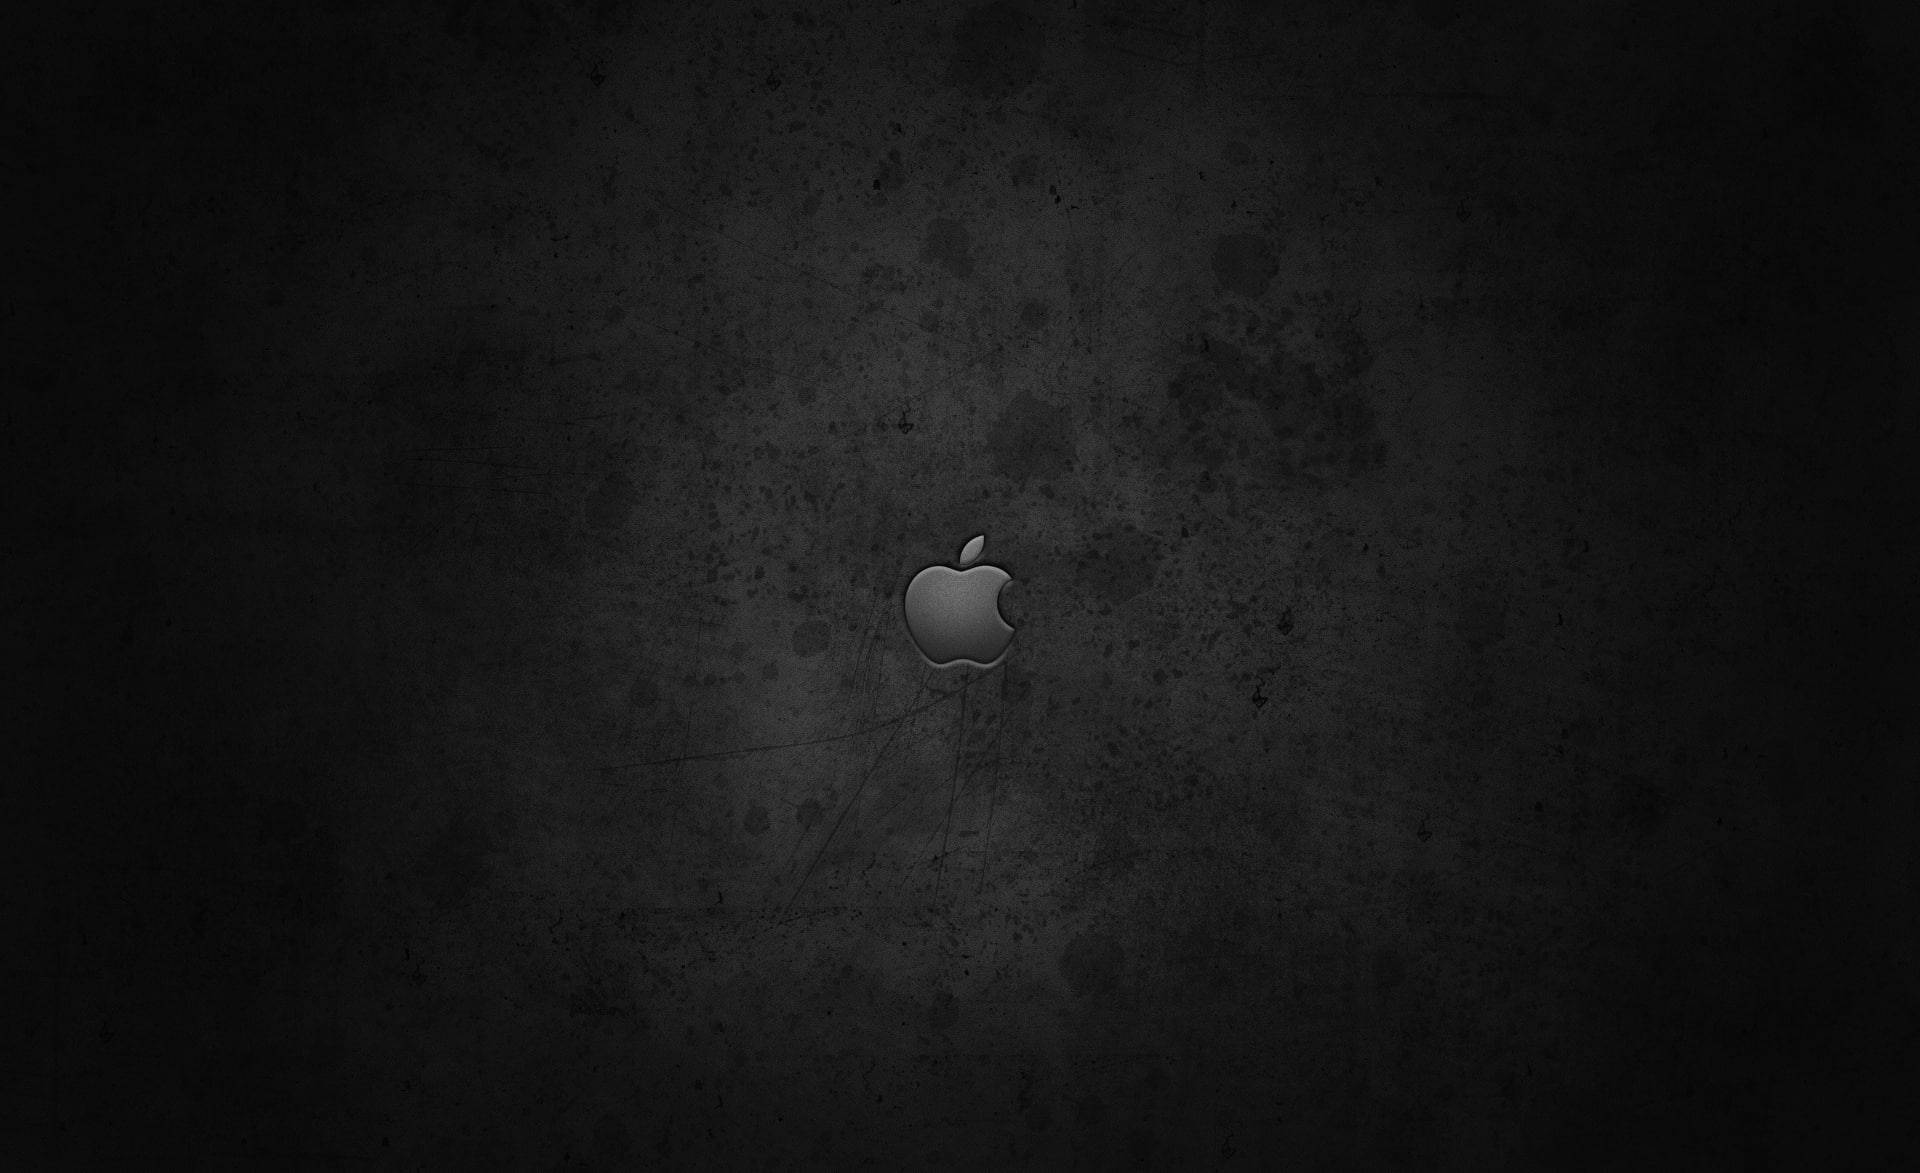 Dark Wall With Apple Logo Wallpaper